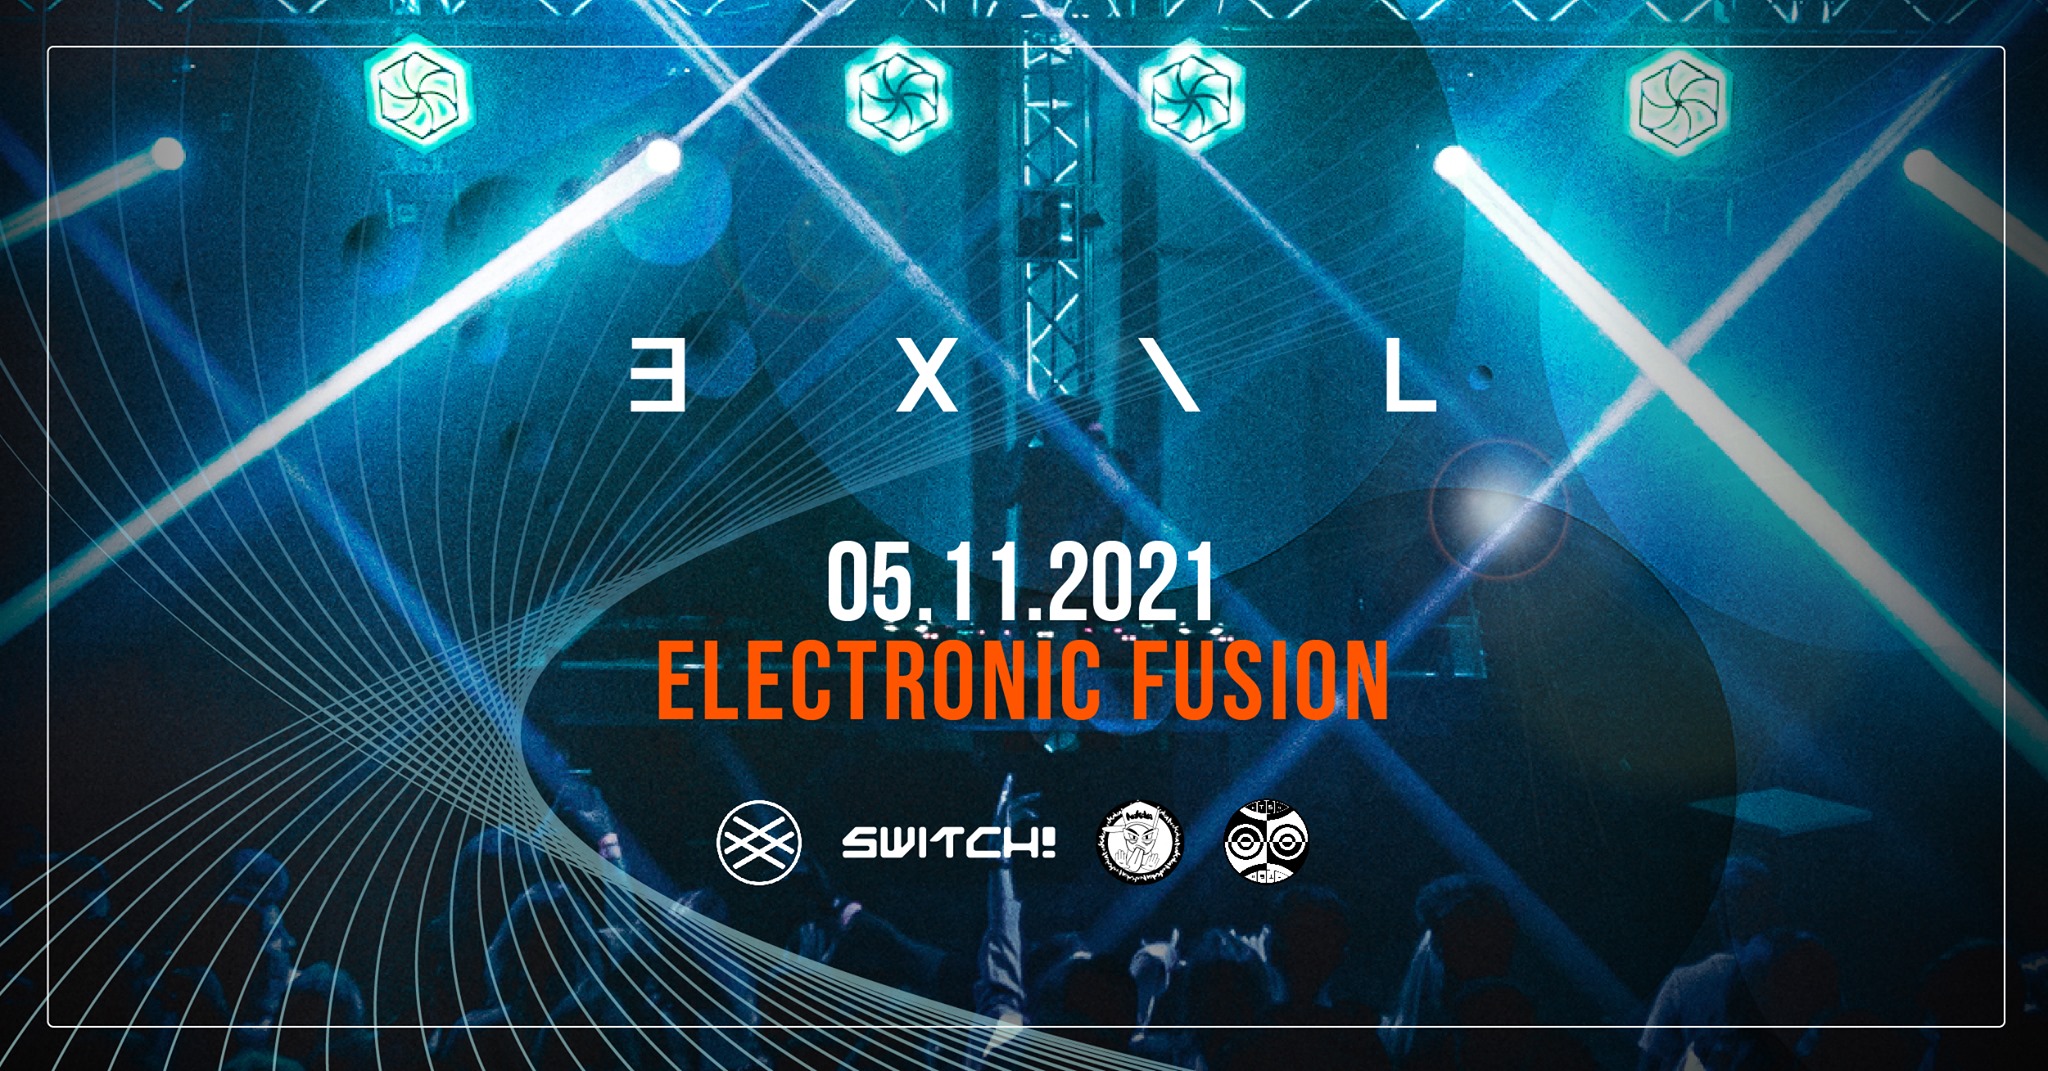 Electronic Fusion am 5. November 2021 @ EXIL.